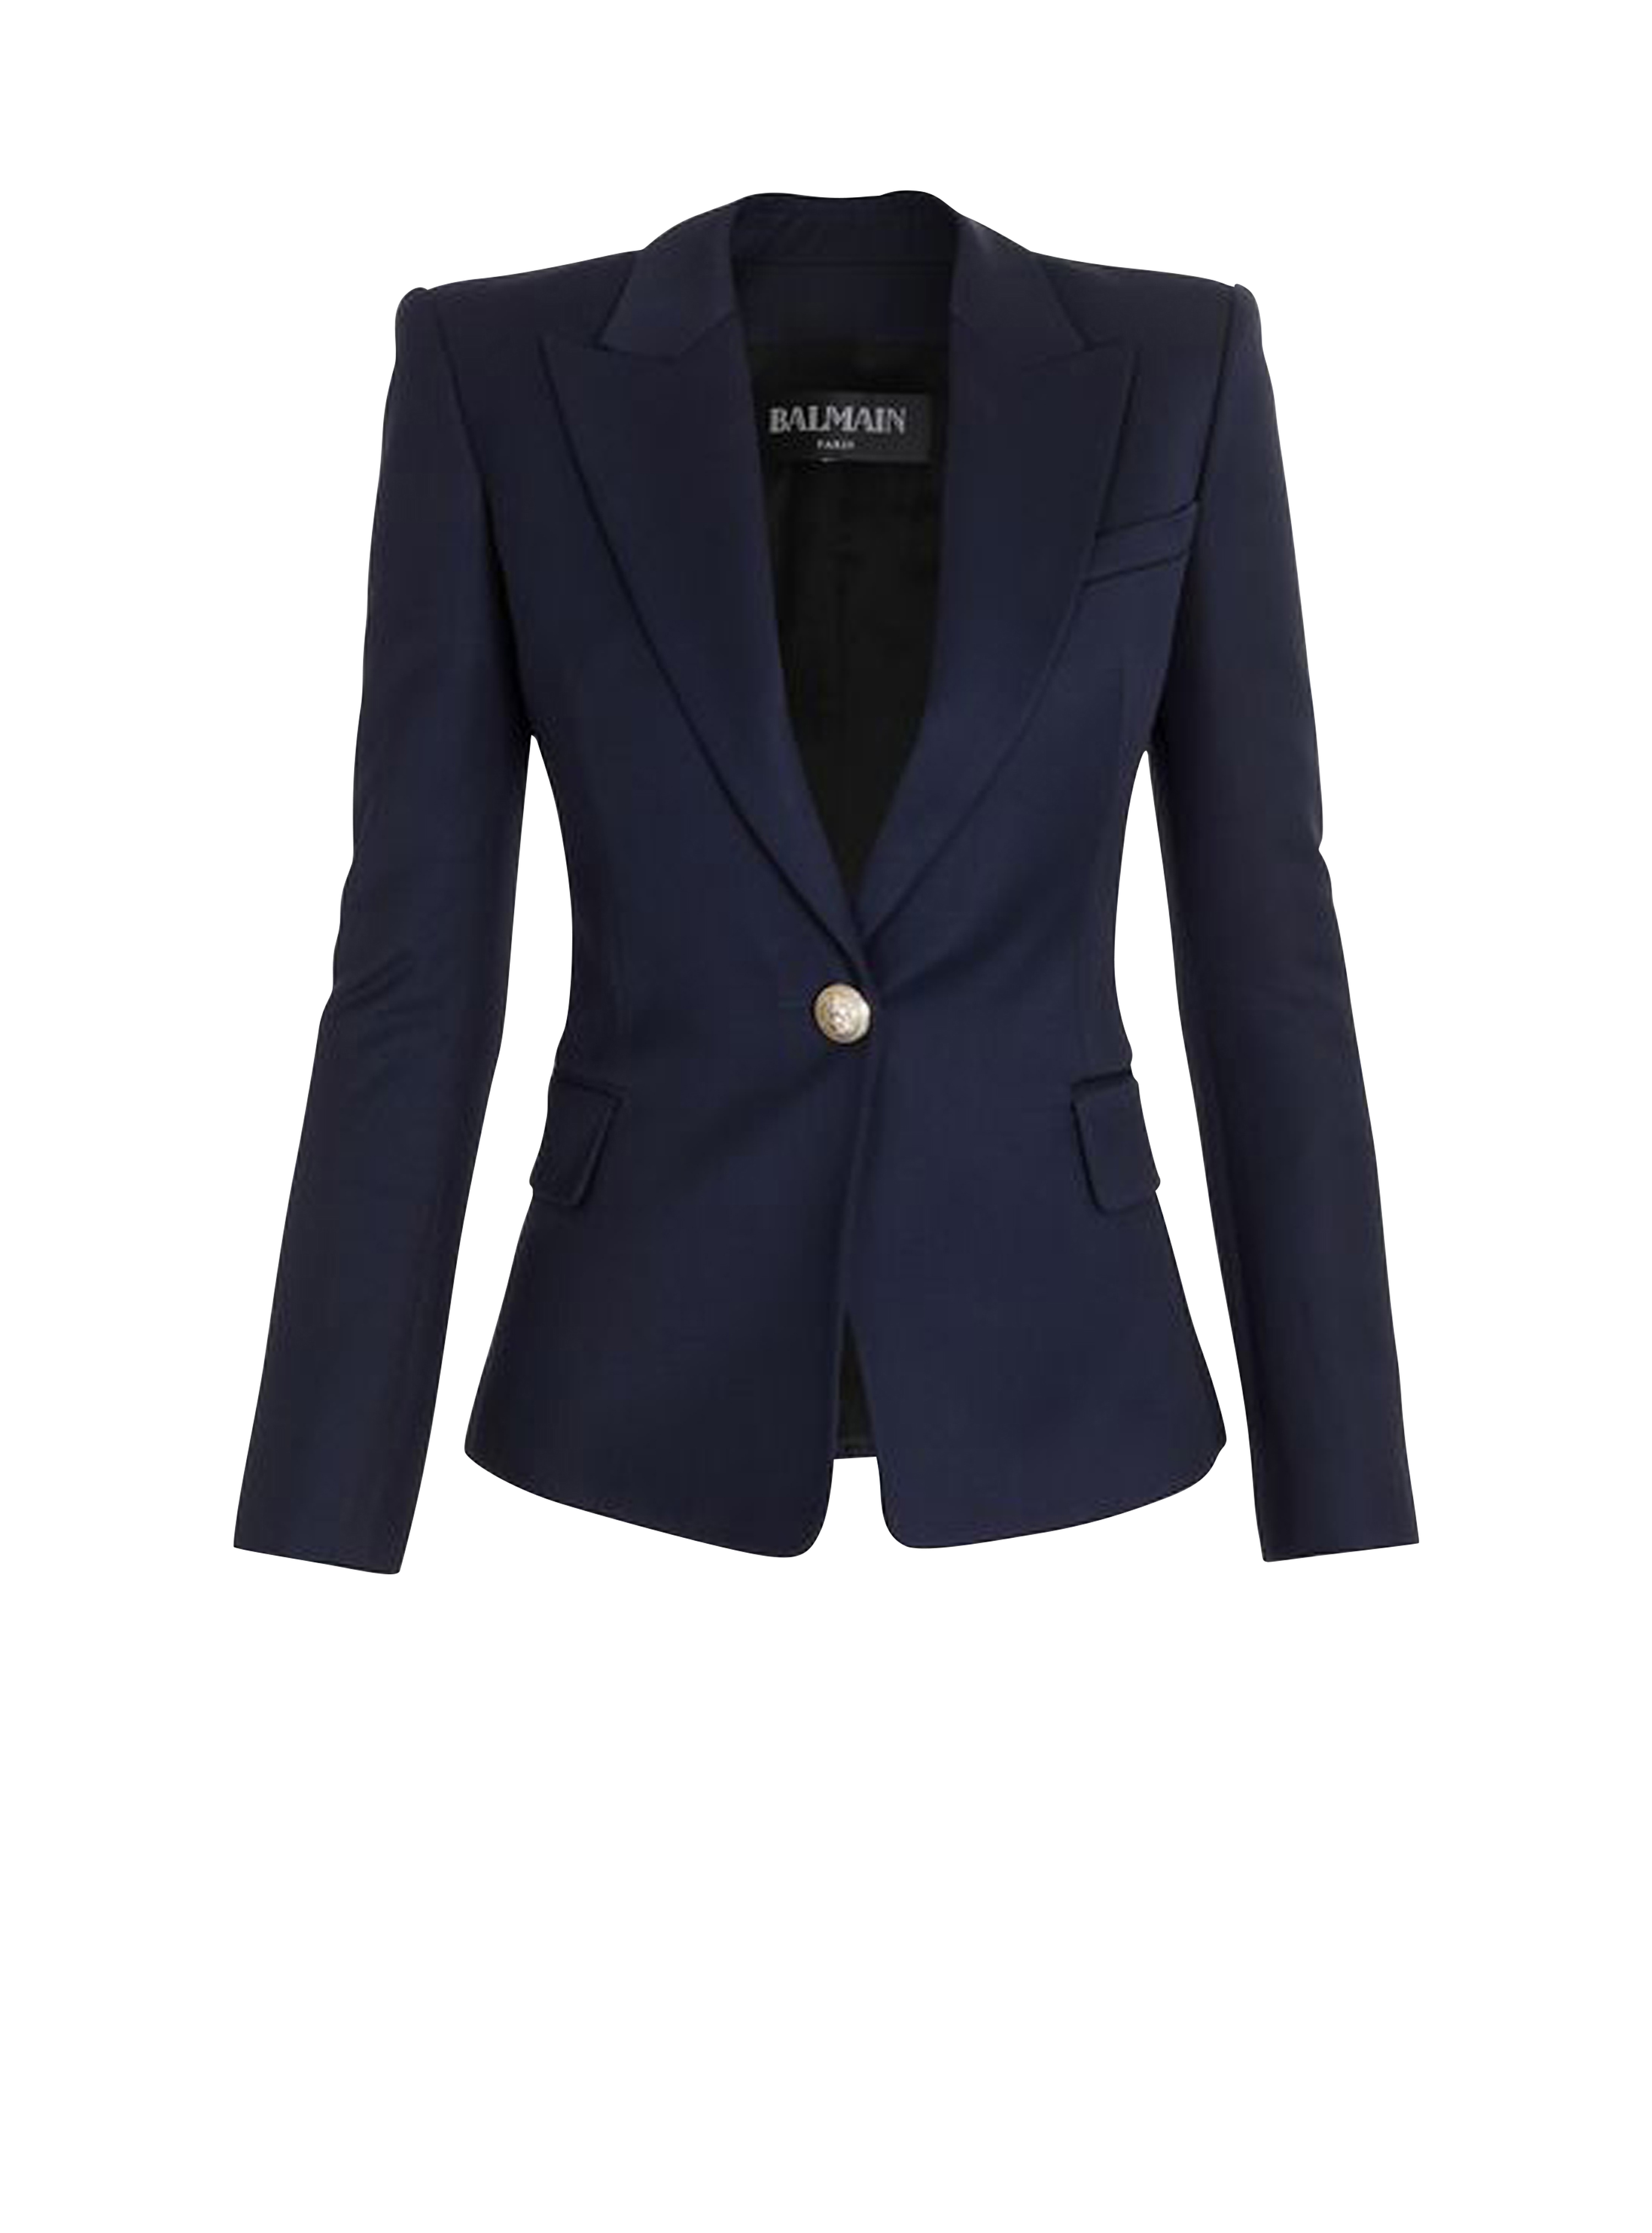 Wool single-button blazer, navy